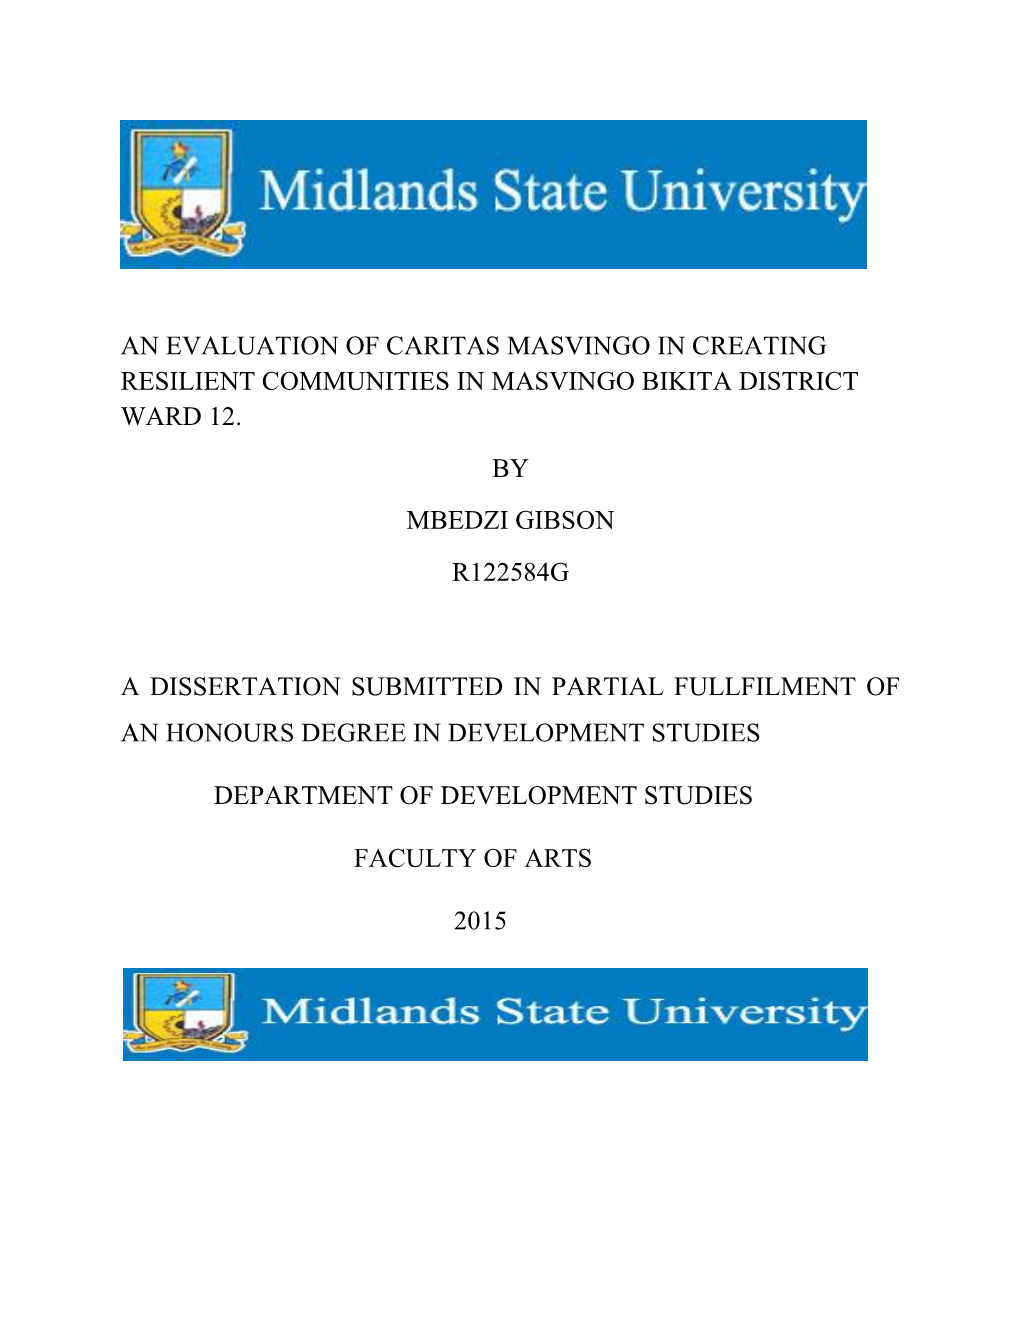 An Evaluation of Caritas Masvingo in Creating Resilient Communities in Masvingo Bikita District Ward 12